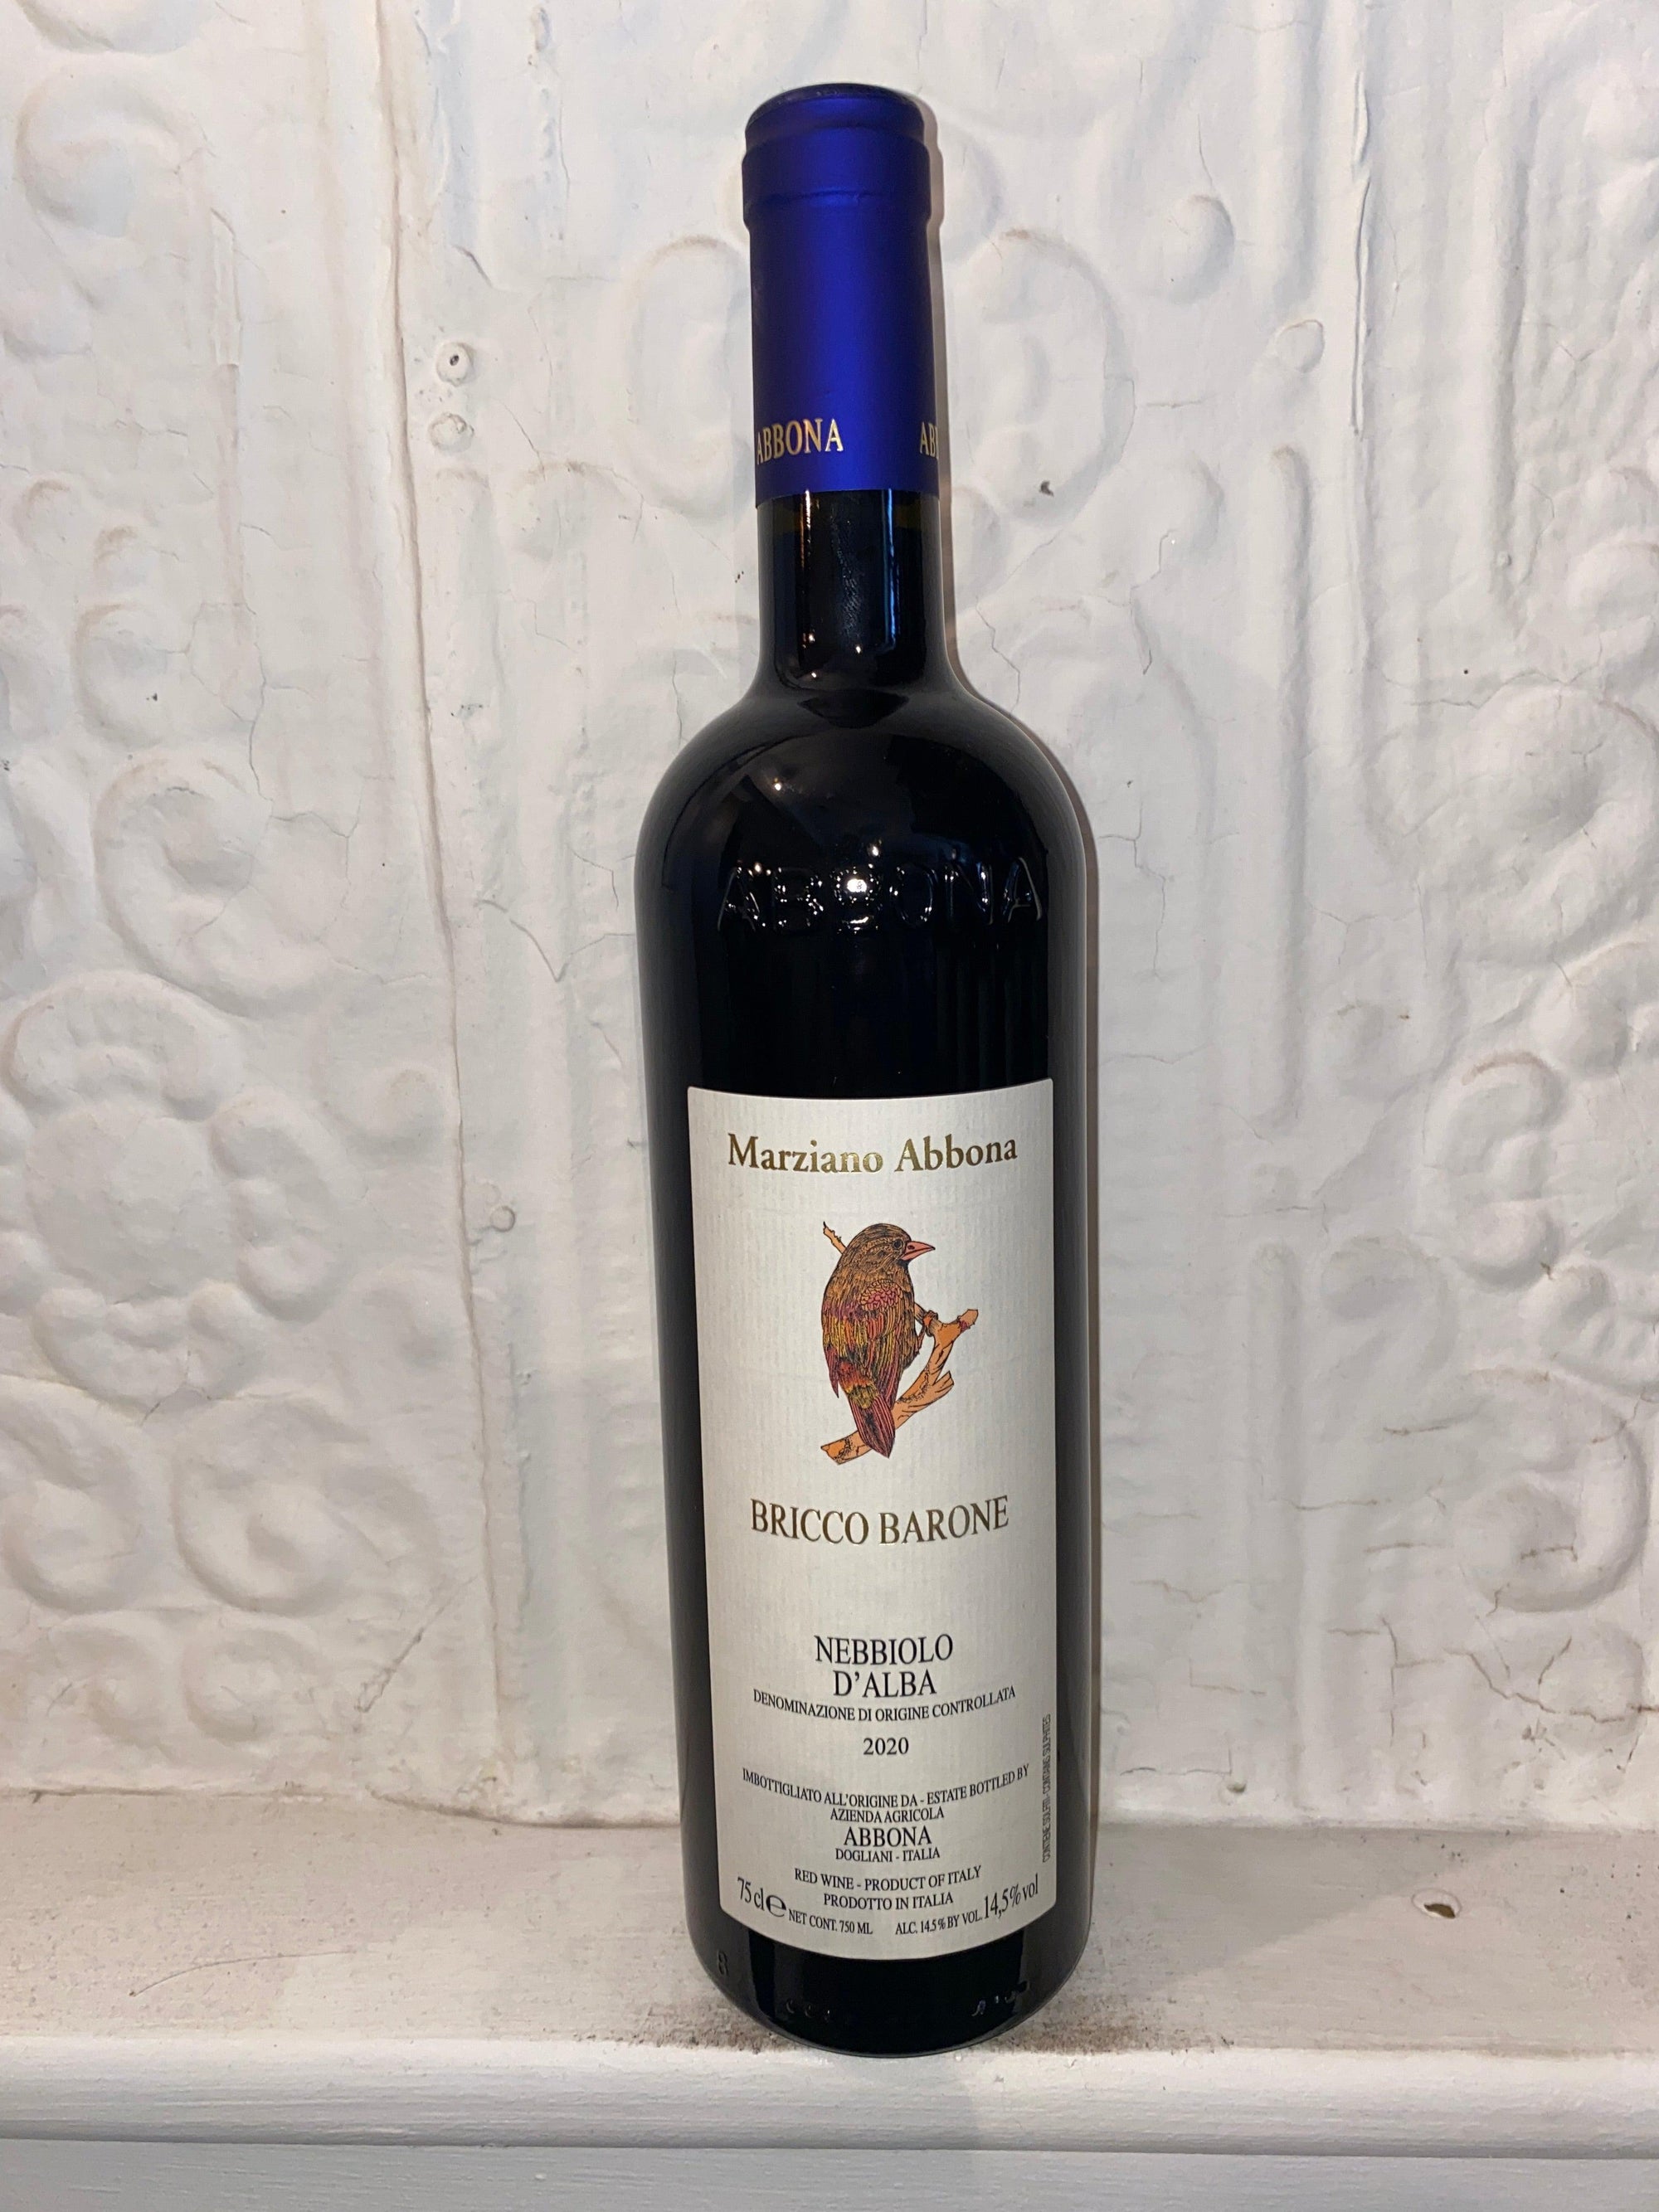 Bricco Barone Nebbiolo D'Alba, Mariziano Abbona 2020 (Piedmont, Italy)-Wine-Bibber & Bell